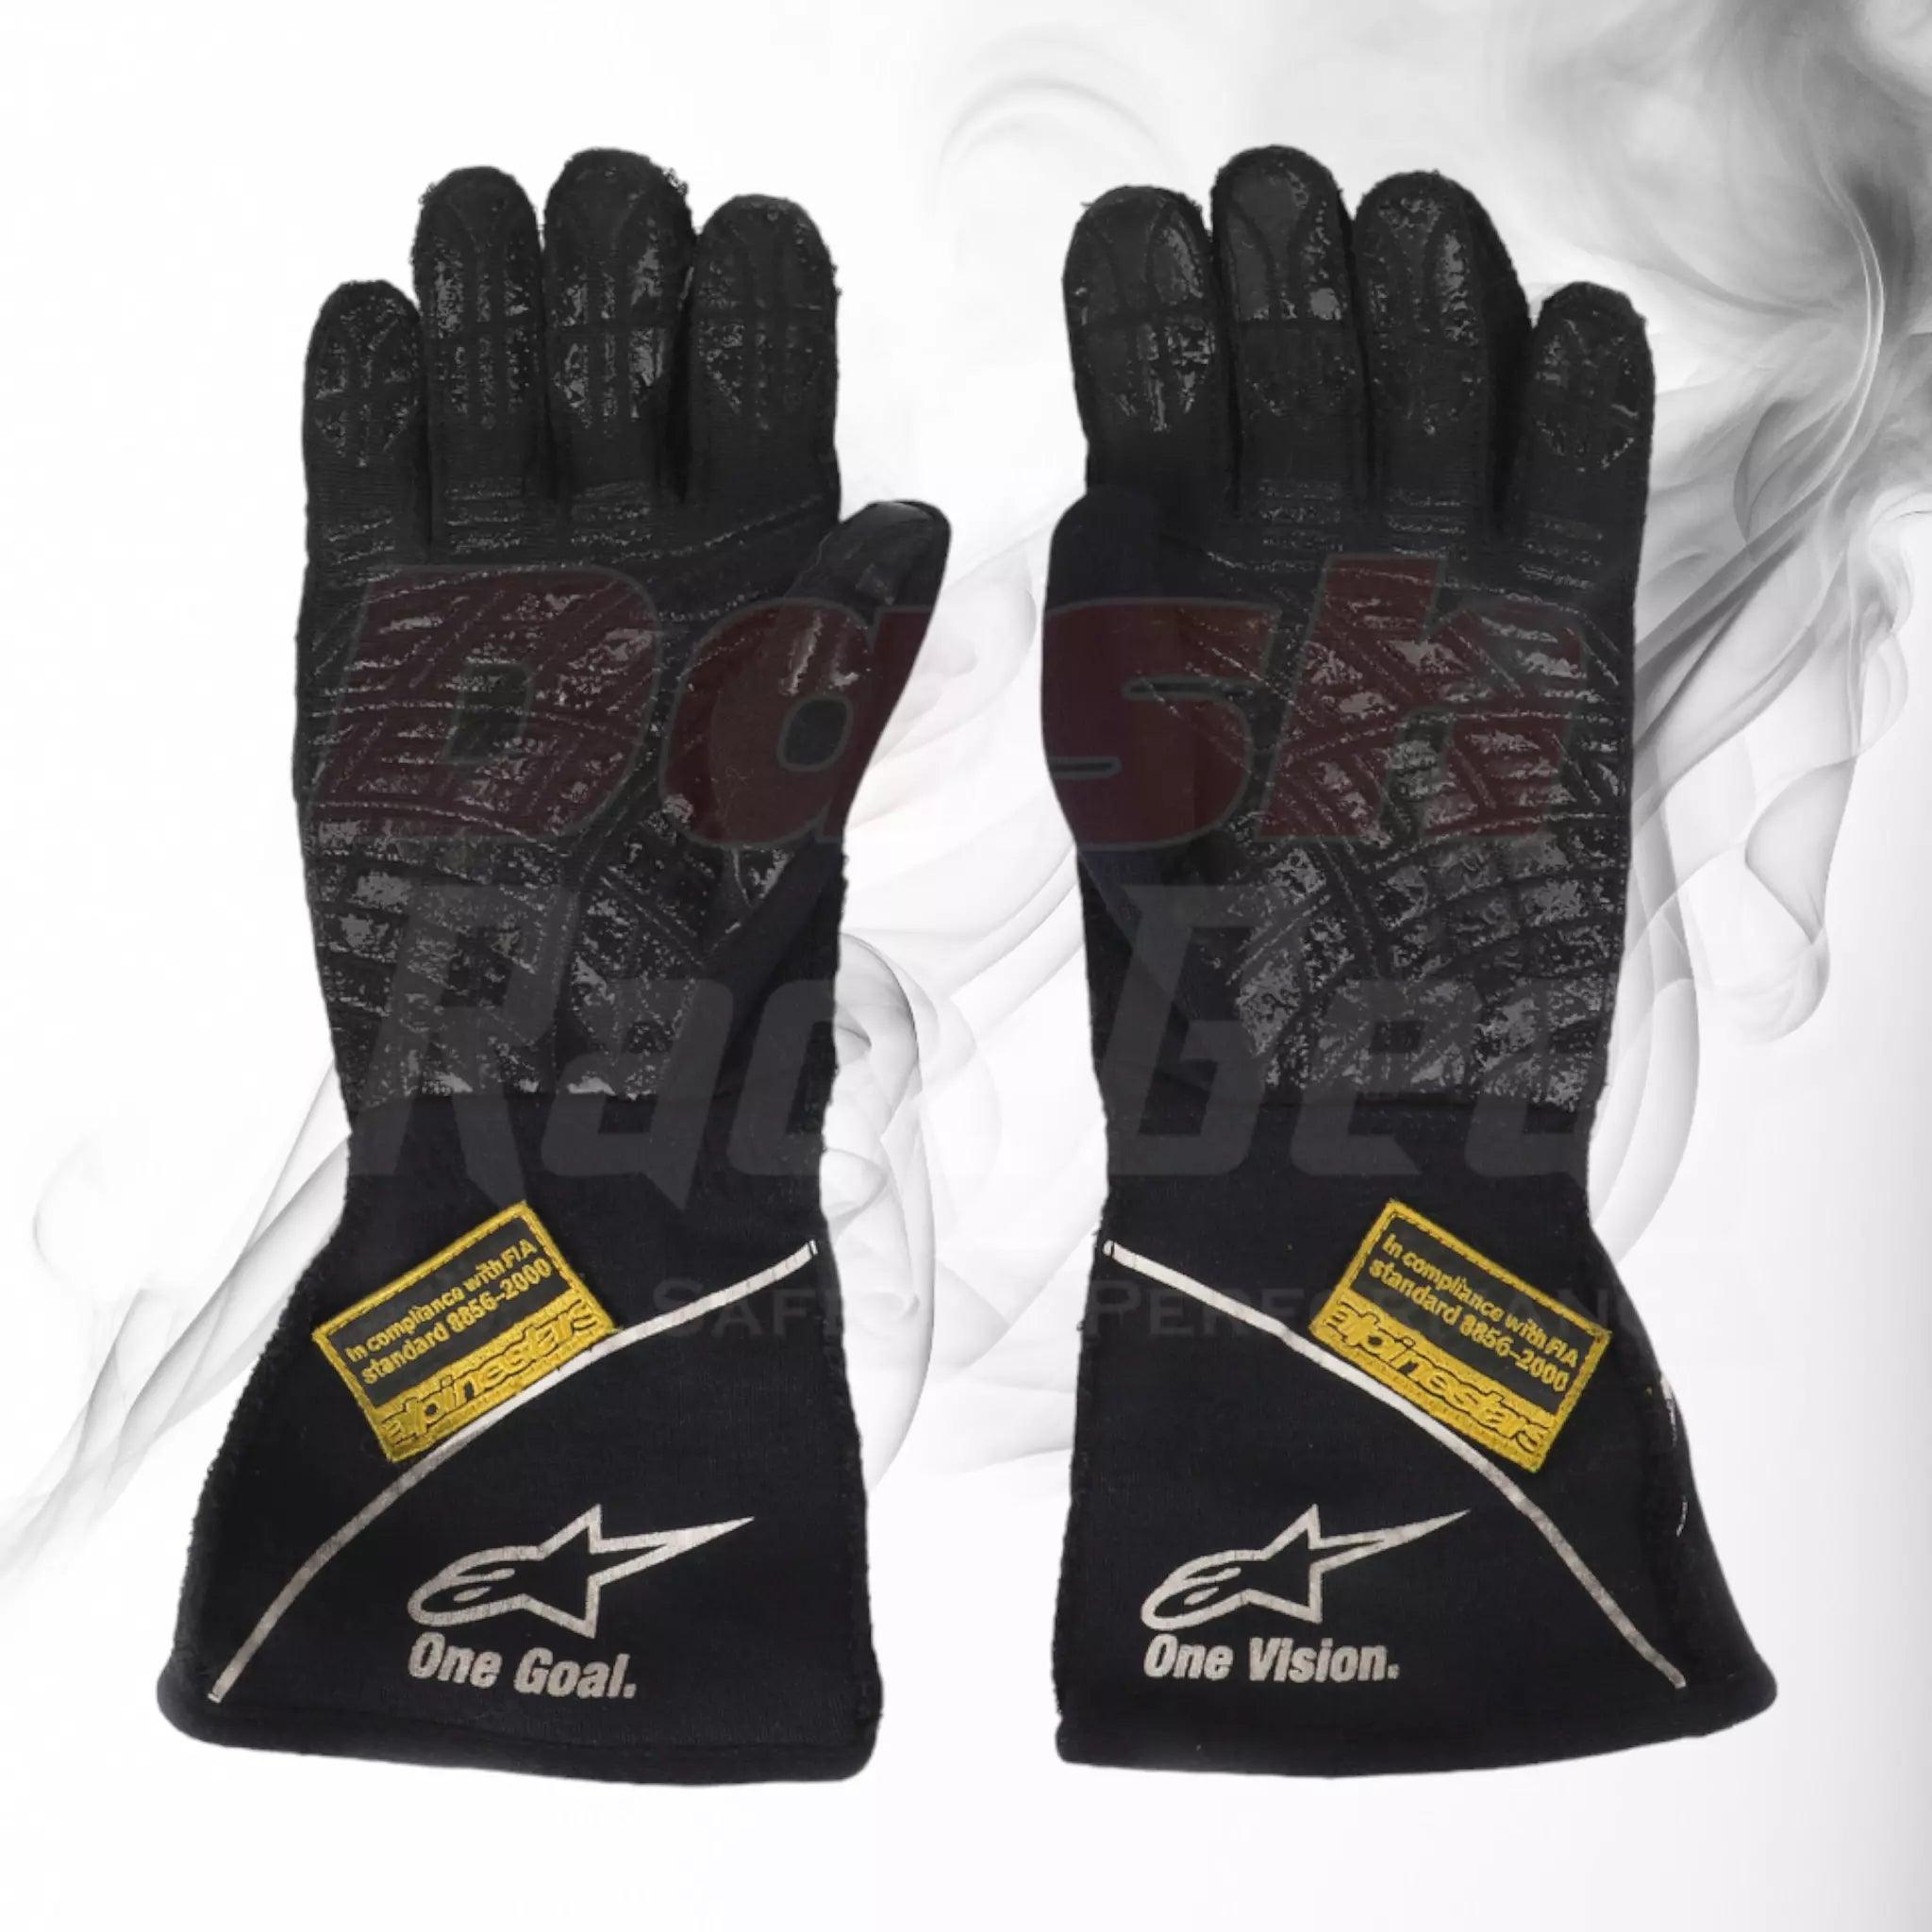 2015 Valtteri Bottas F1 Race Gloves - Dash Racegear 